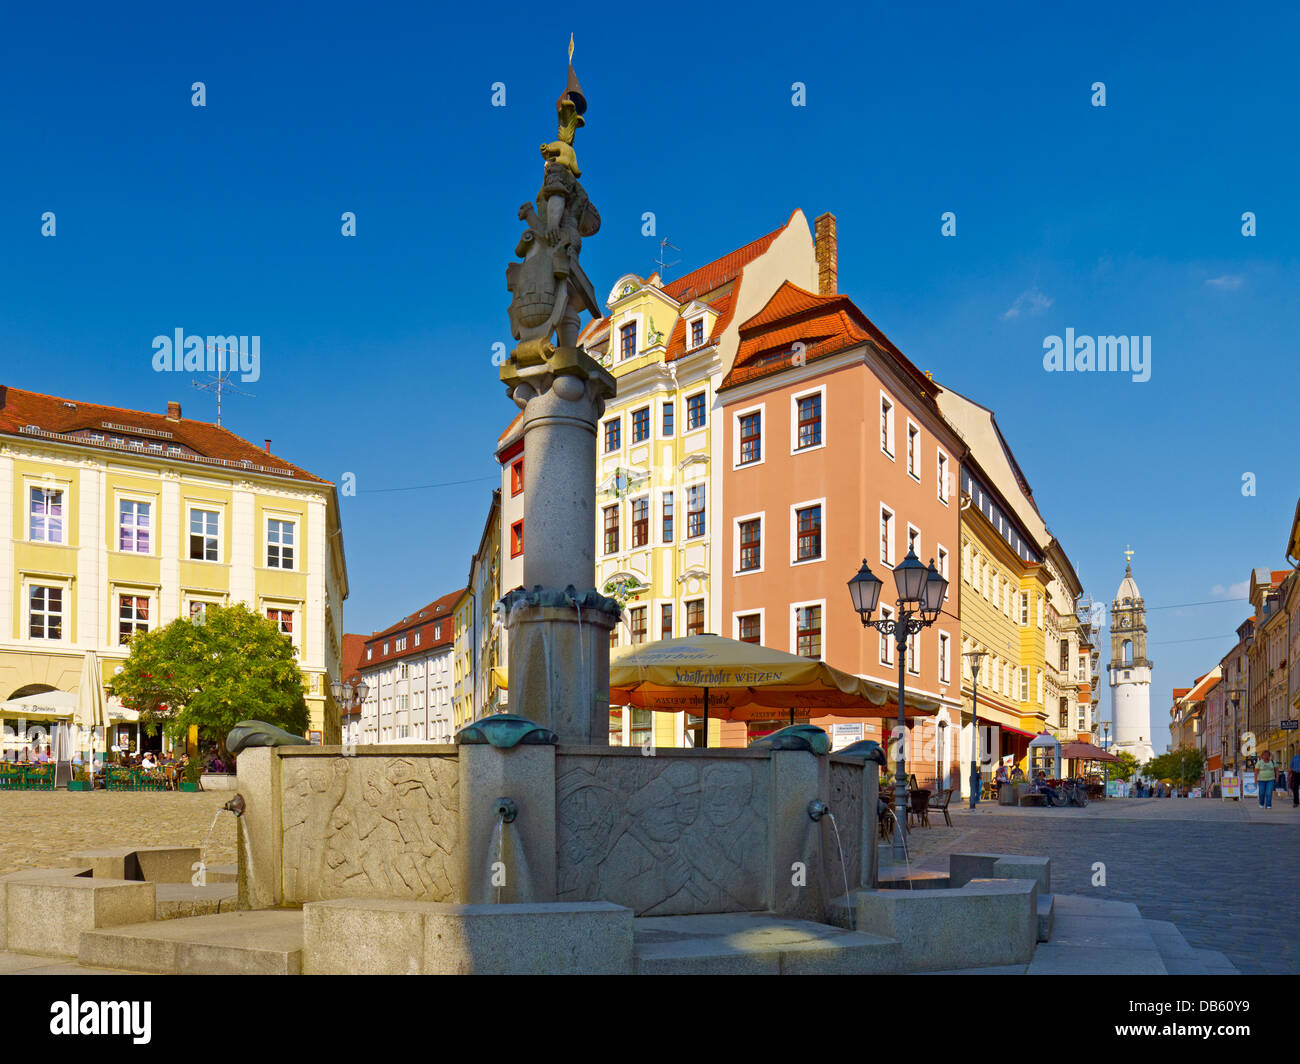 Hauptmarkt market square with fountain and Reichenstrasse street, Bautzen, Upper Lusatia, Saxony, Germany Stock Photo